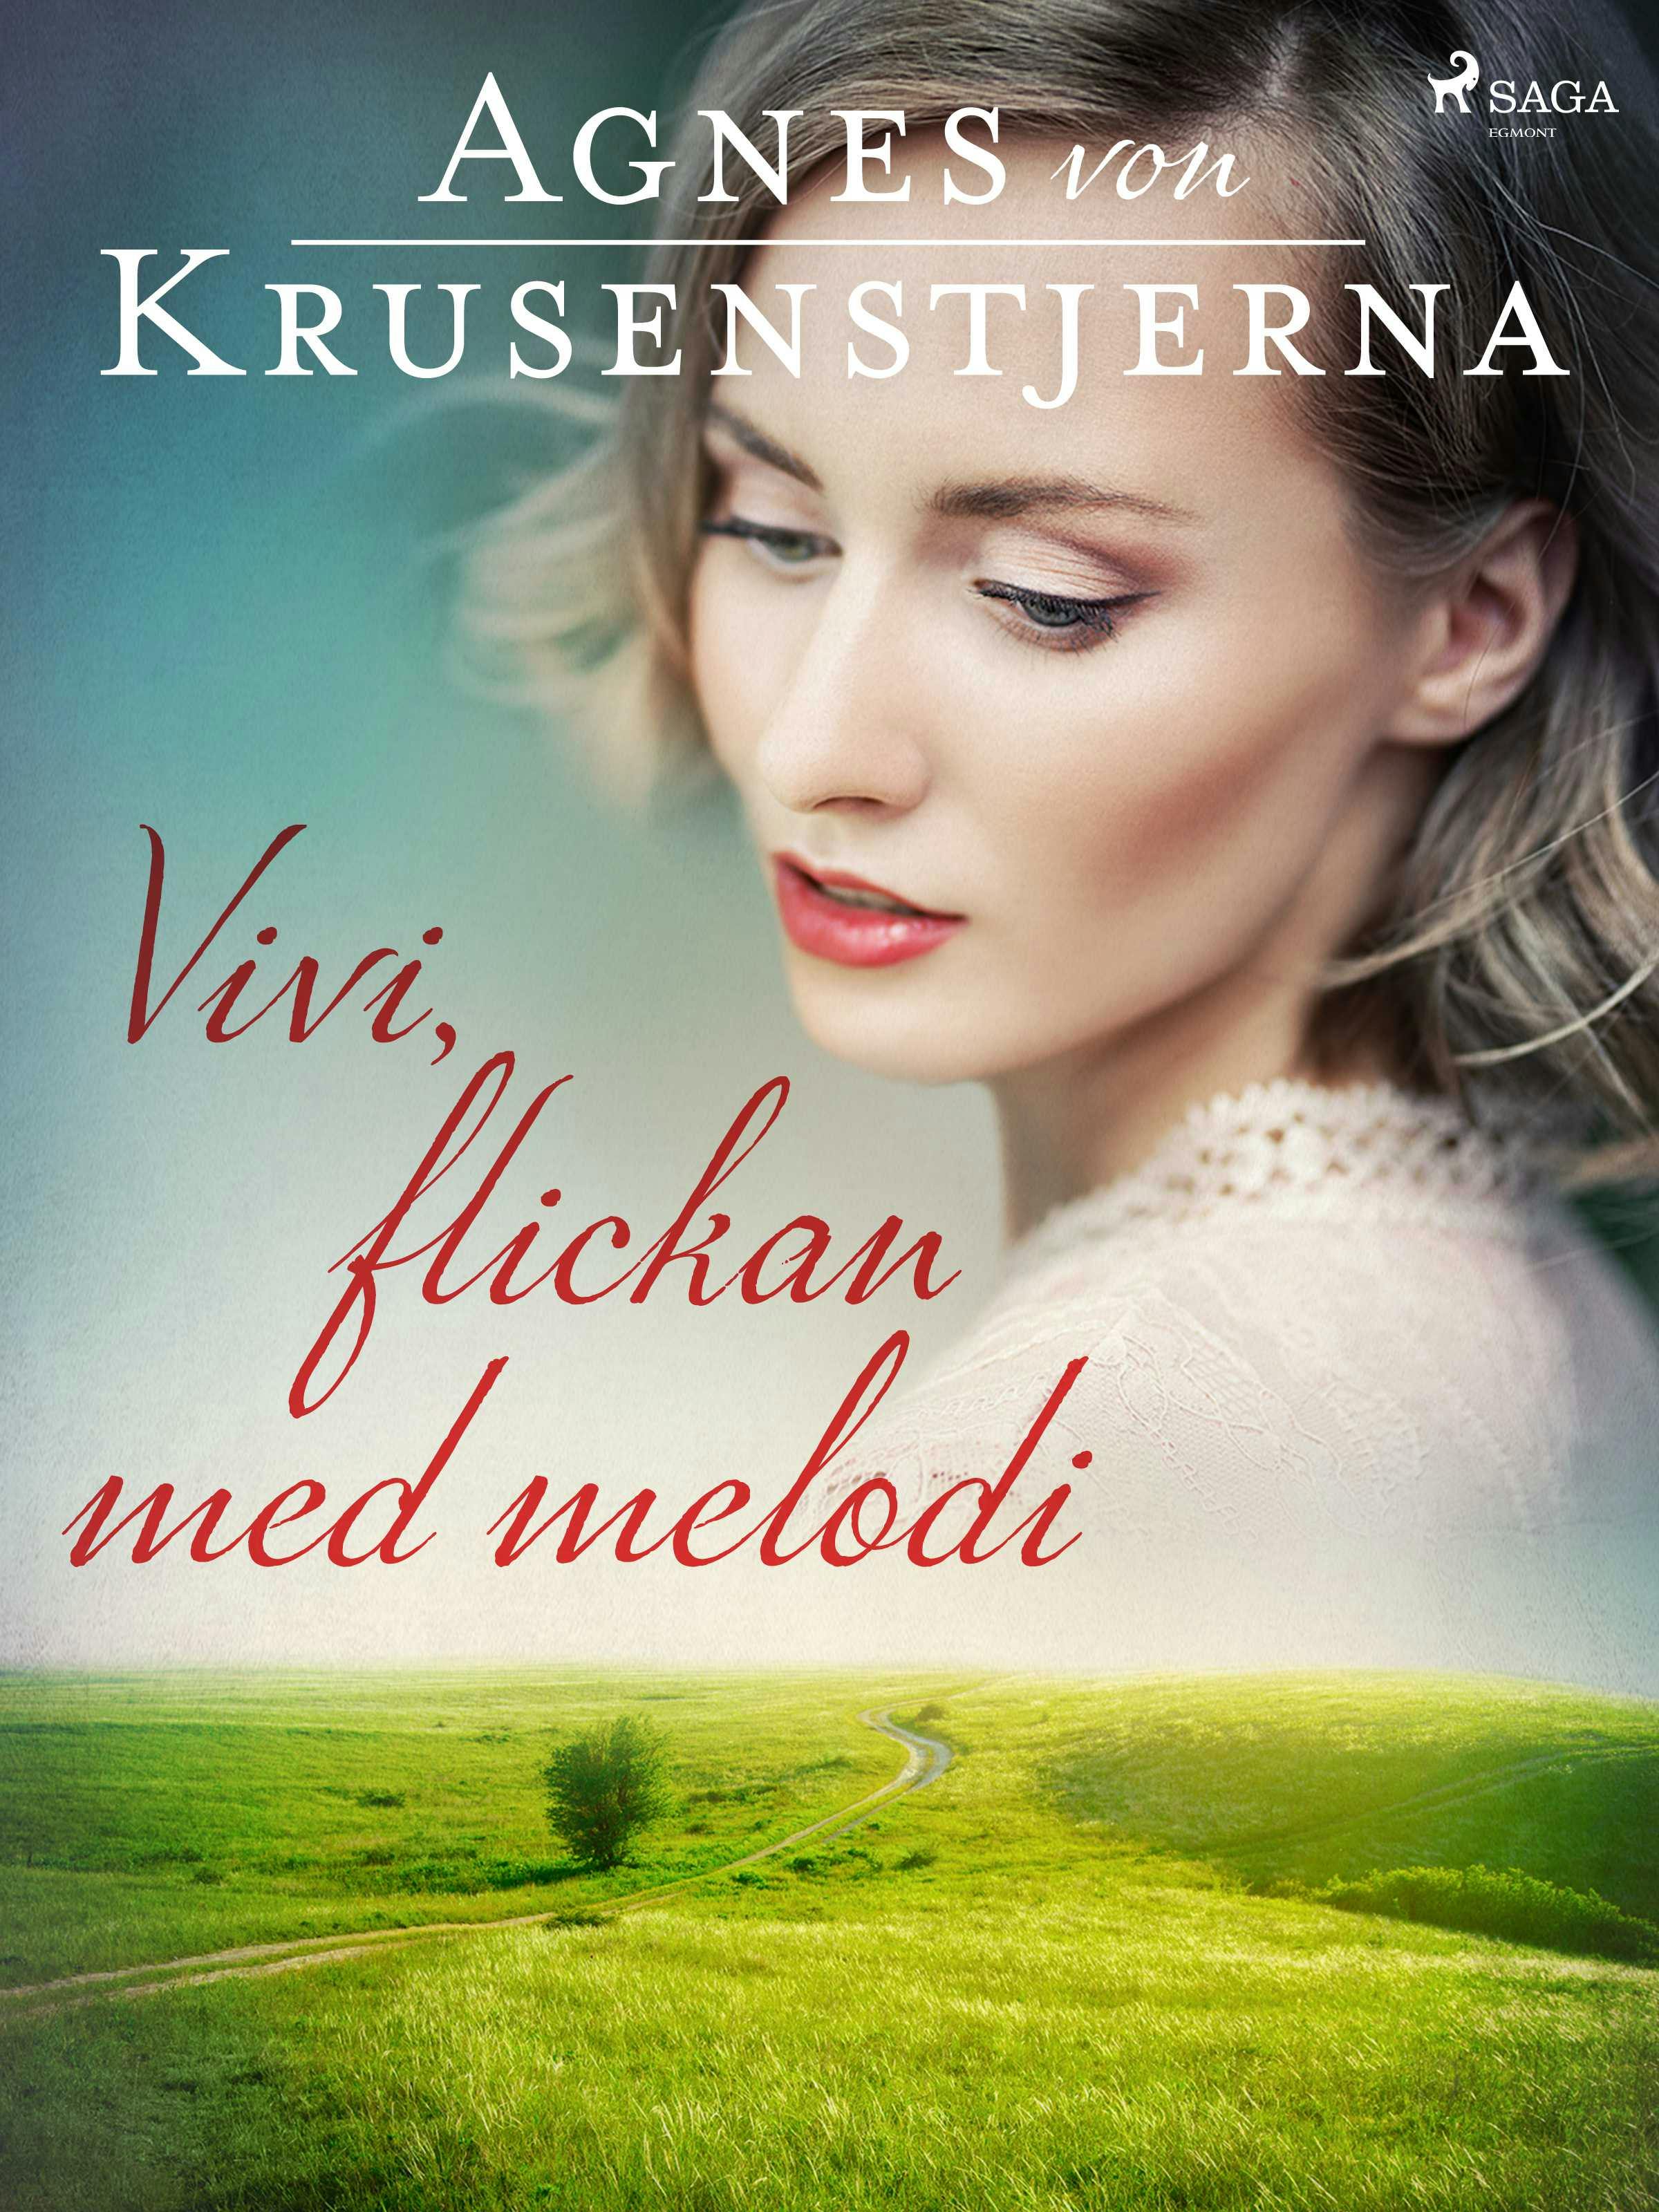 Vivi, flickan med melodi - Agnes Von Krusenstjerna